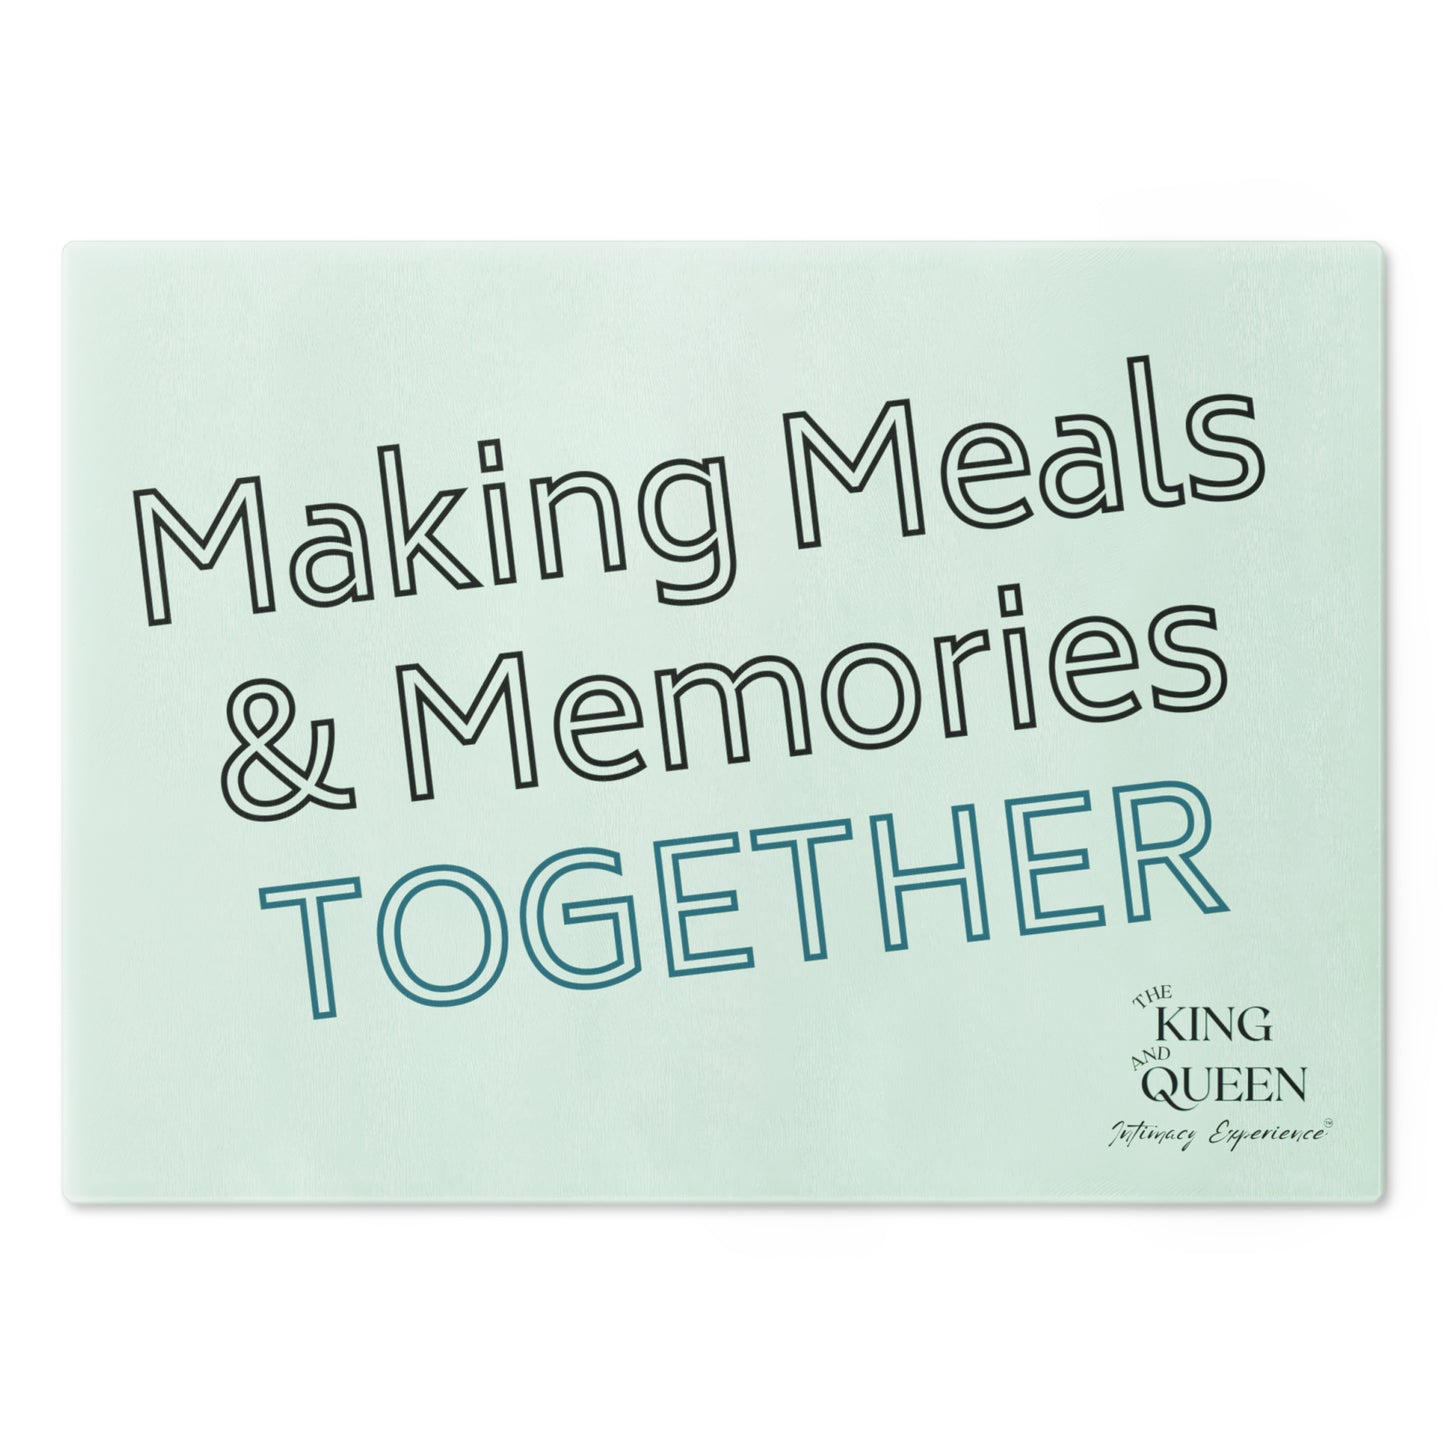 "Making Meals & Memories" Cutting Board